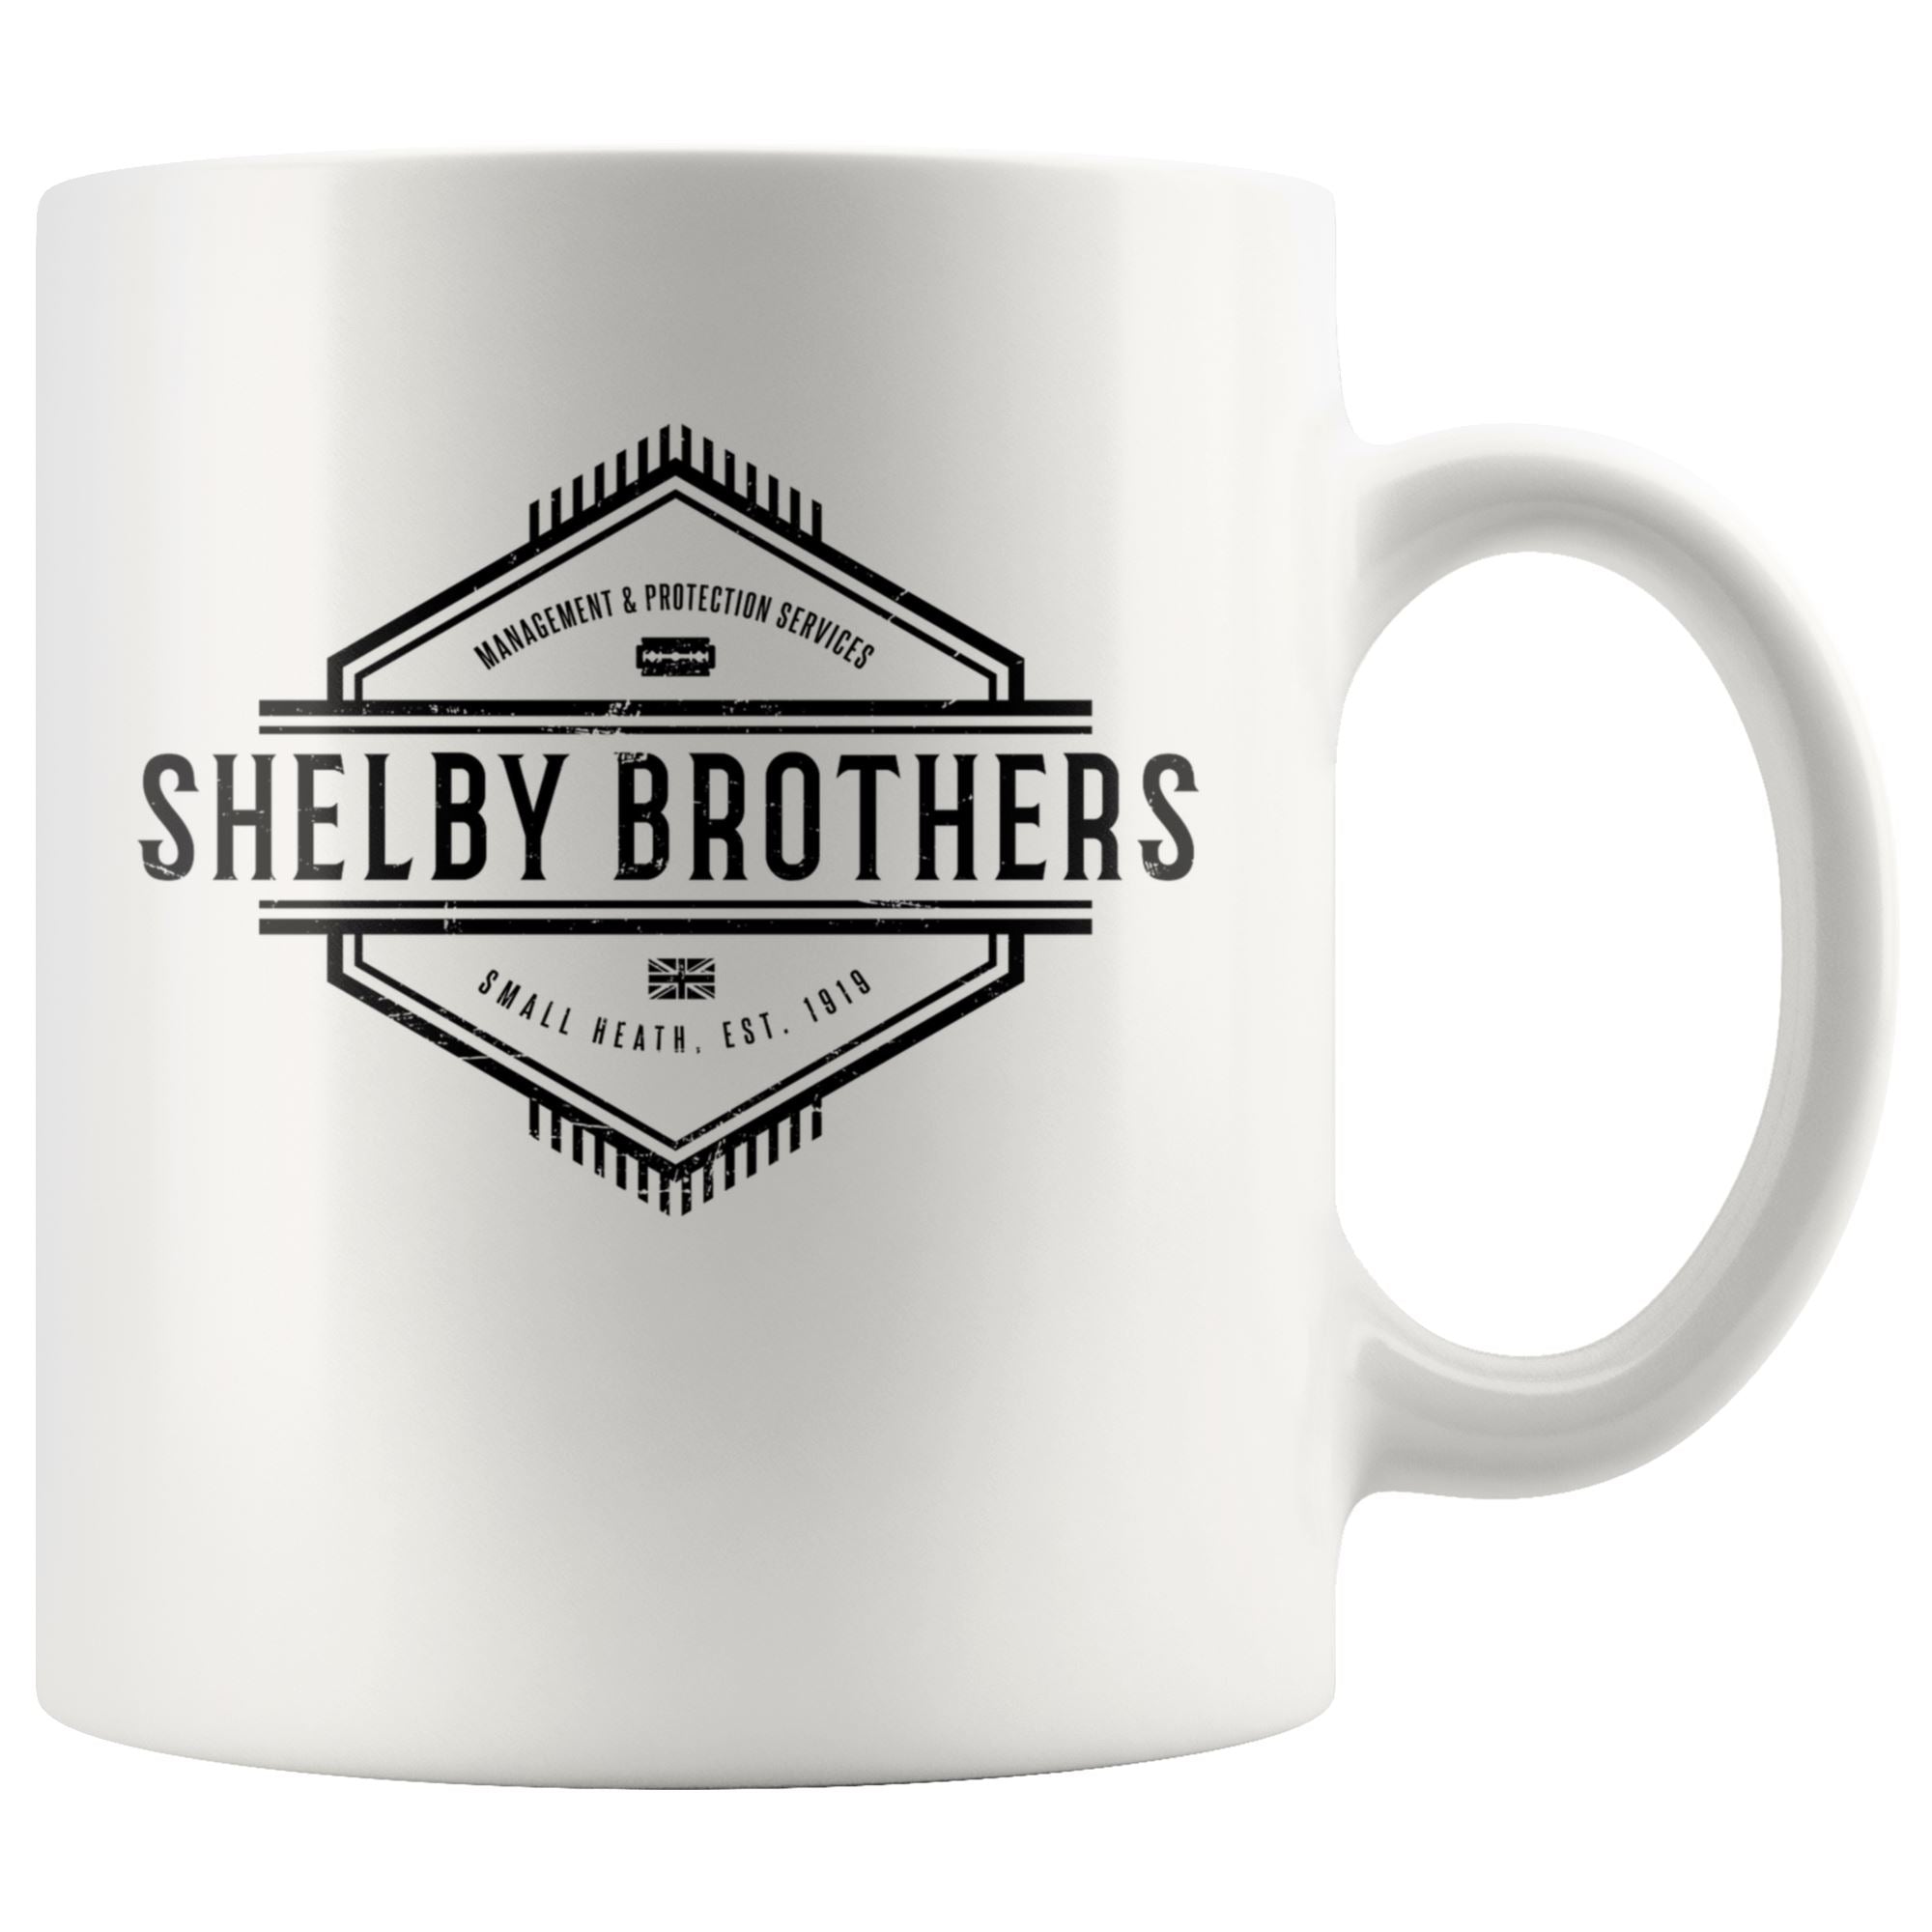 Shelby Brothers Drinkware teelaunch 11oz Mug 